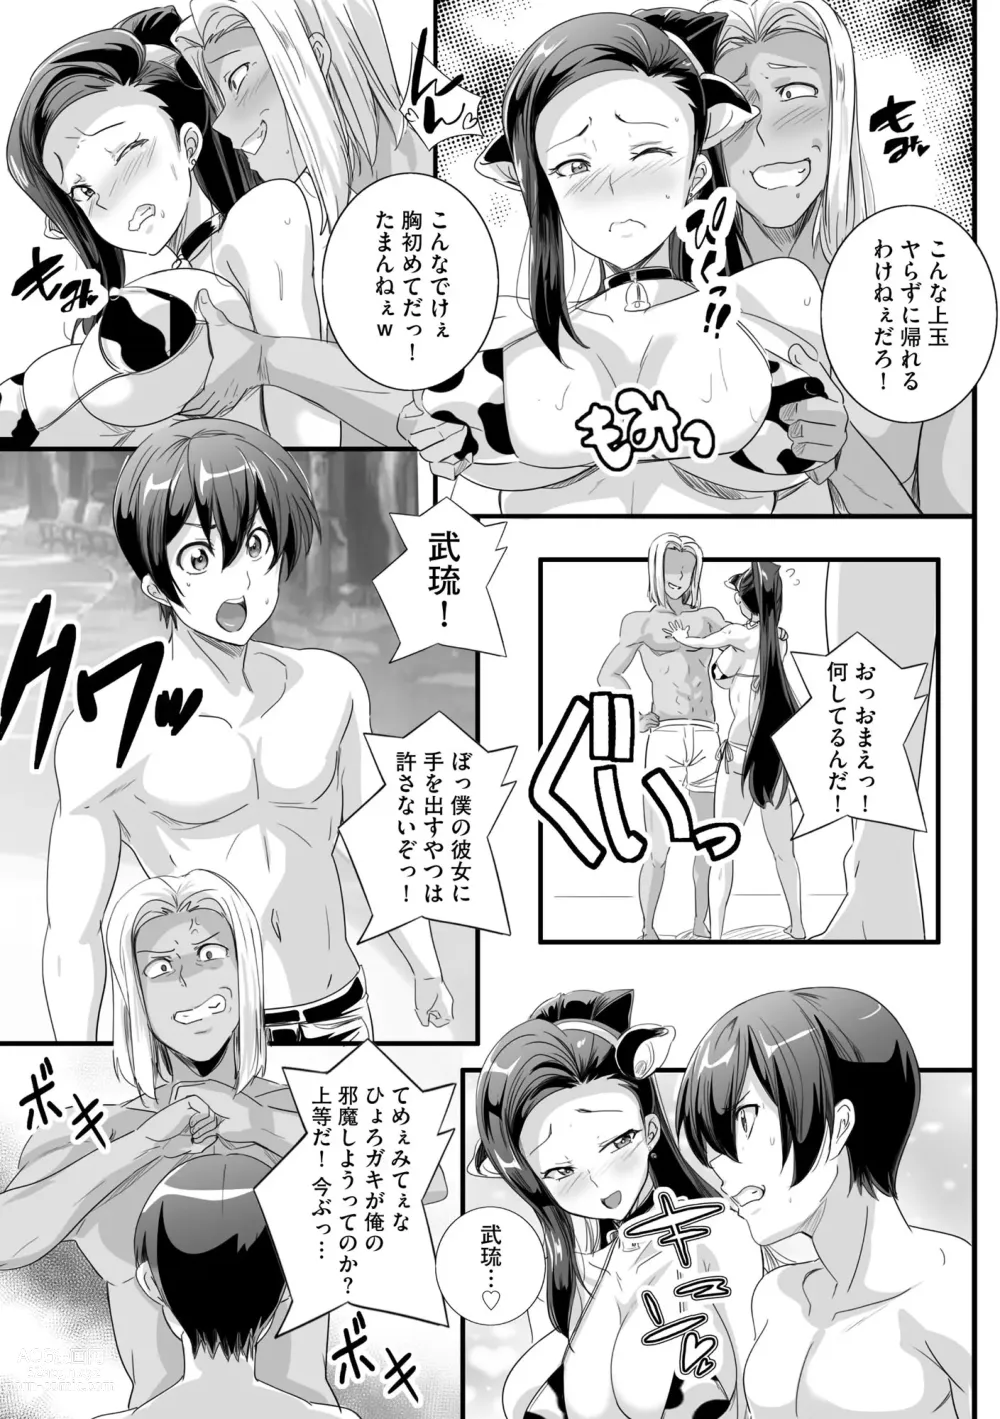 Page 13 of manga Cyberia Plus Vol. 13